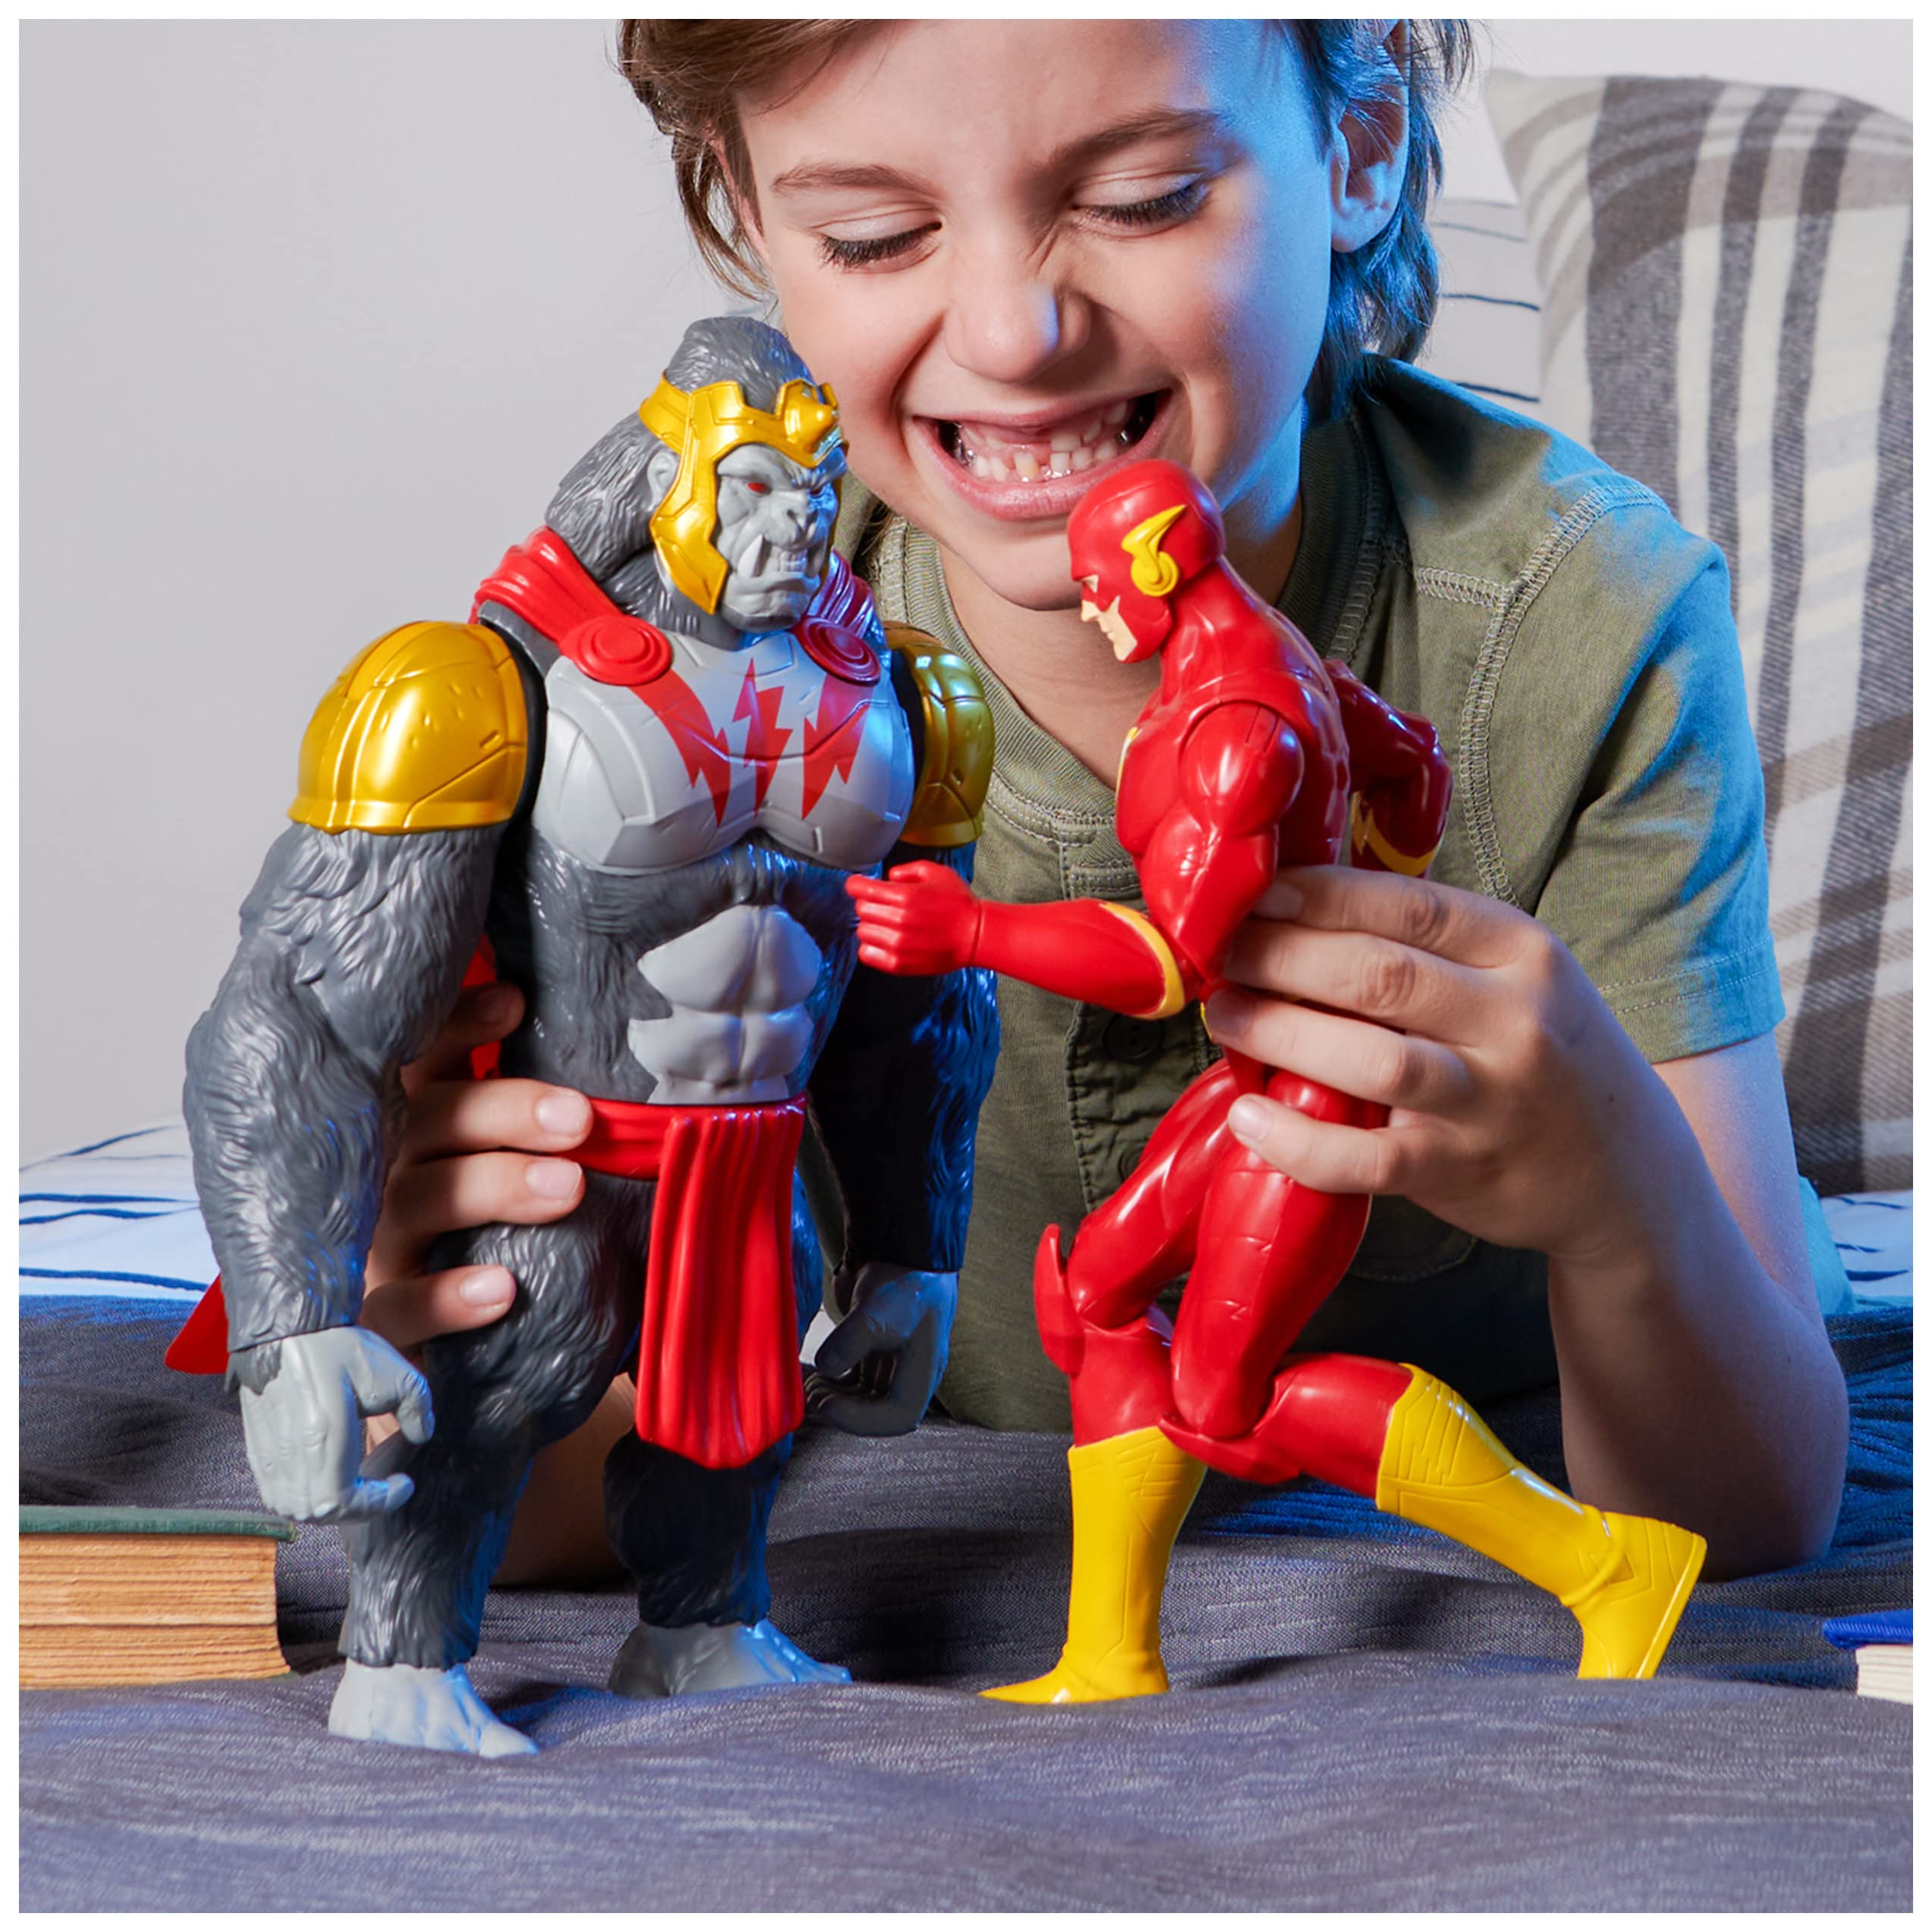 DC Comics, Batman vs. Gorilla Grodd 4-Pack, 30-cm Action Figures (Batman, The Flash, Gorilla Grodd, King Shark), Kids’ Toys for Boys and Girls Aged 3 and Up